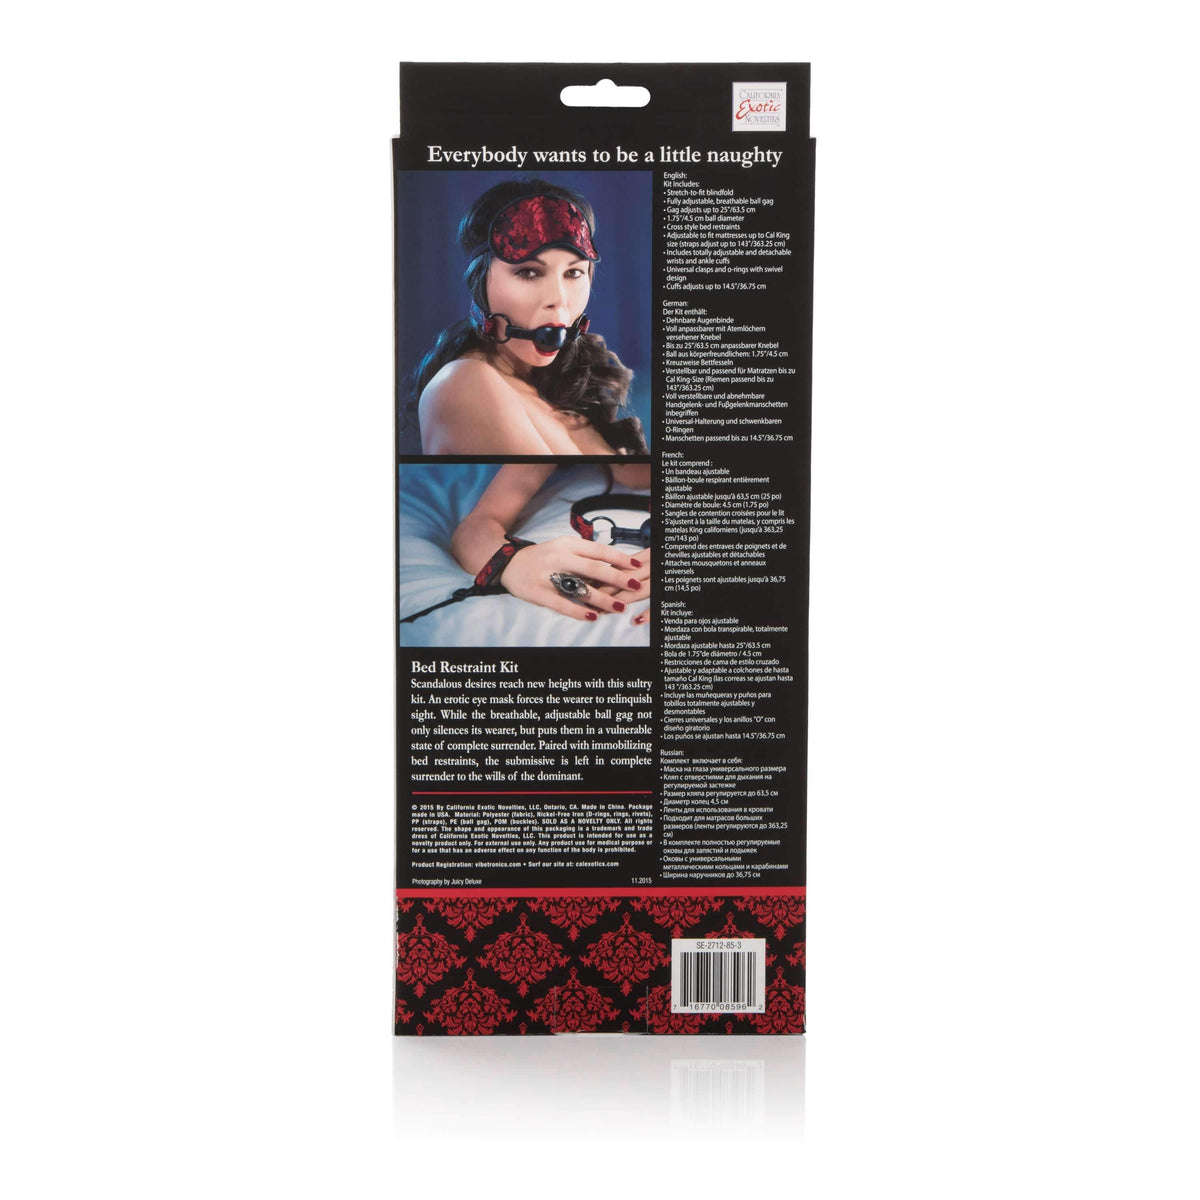 California Exotics - Scandal Bed Restraint Kit (Black) CE1671 CherryAffairs